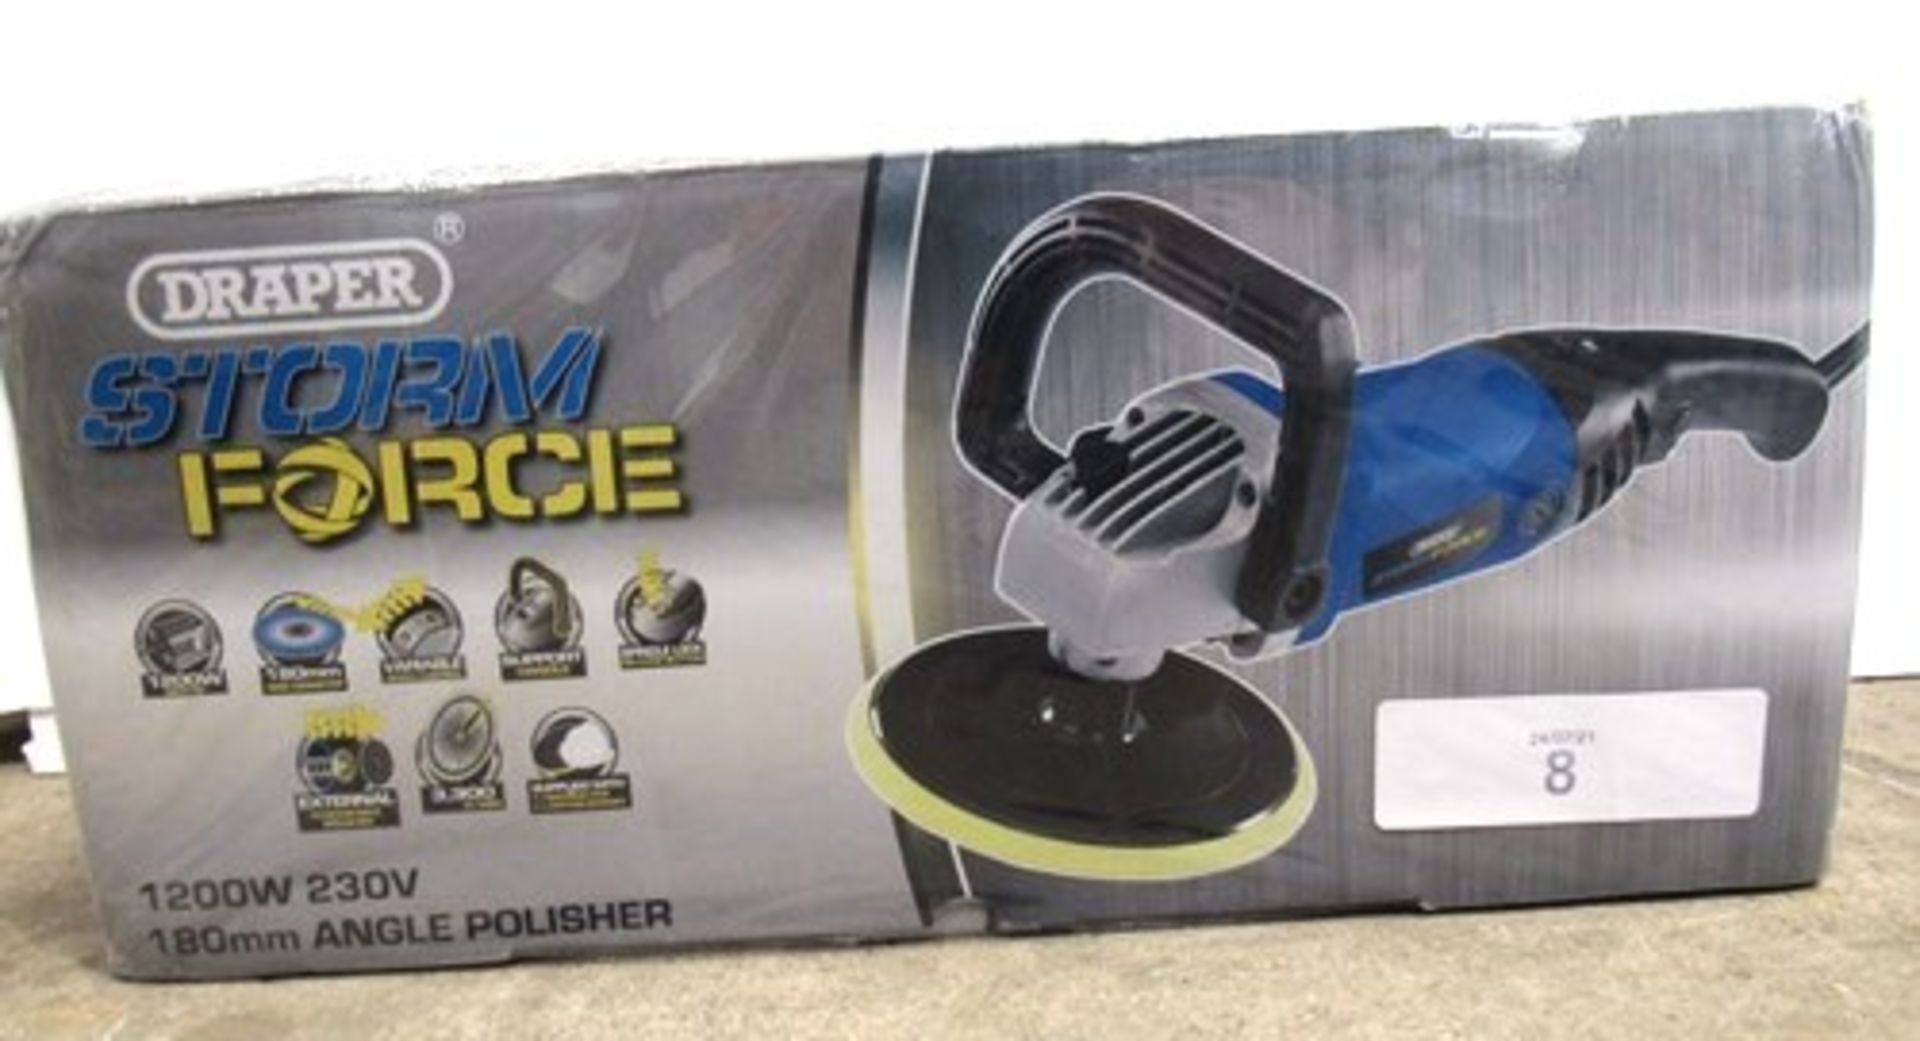 Draper Storm Force 1200W, 230V angle polisher, 180mm disc - Sealed new in box (TC3)